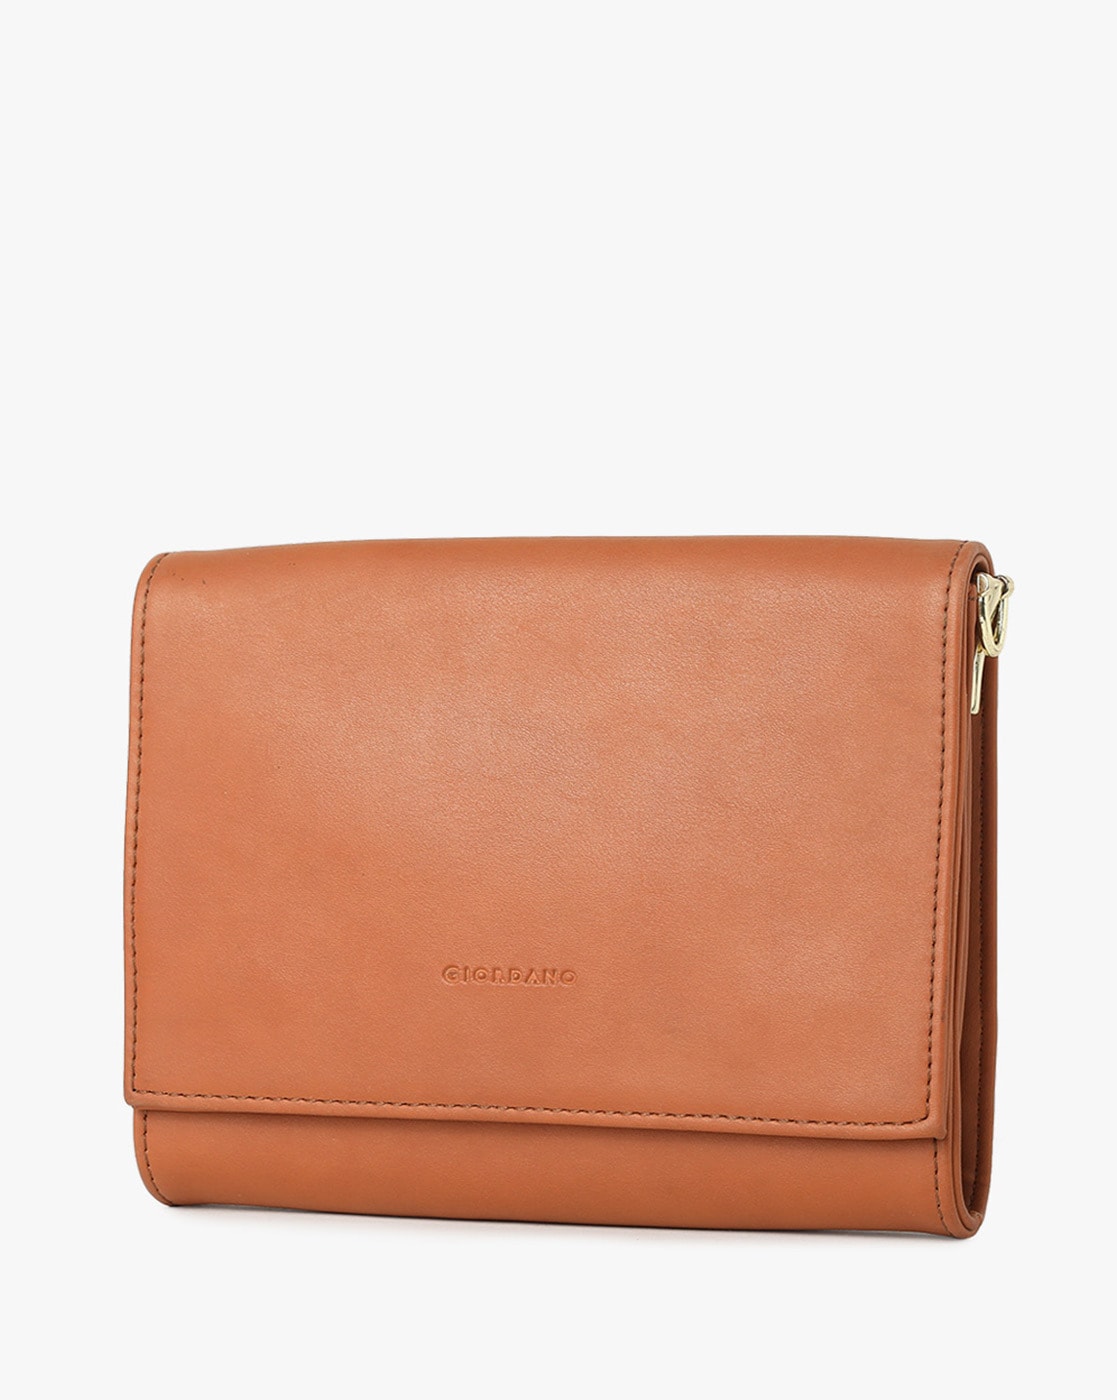 Buy Giordano Women Satchel Handbag | Handbag For Women | Women Satchel Bags  | Women Shoulder Bag -Extra Spacious | at Amazon.in